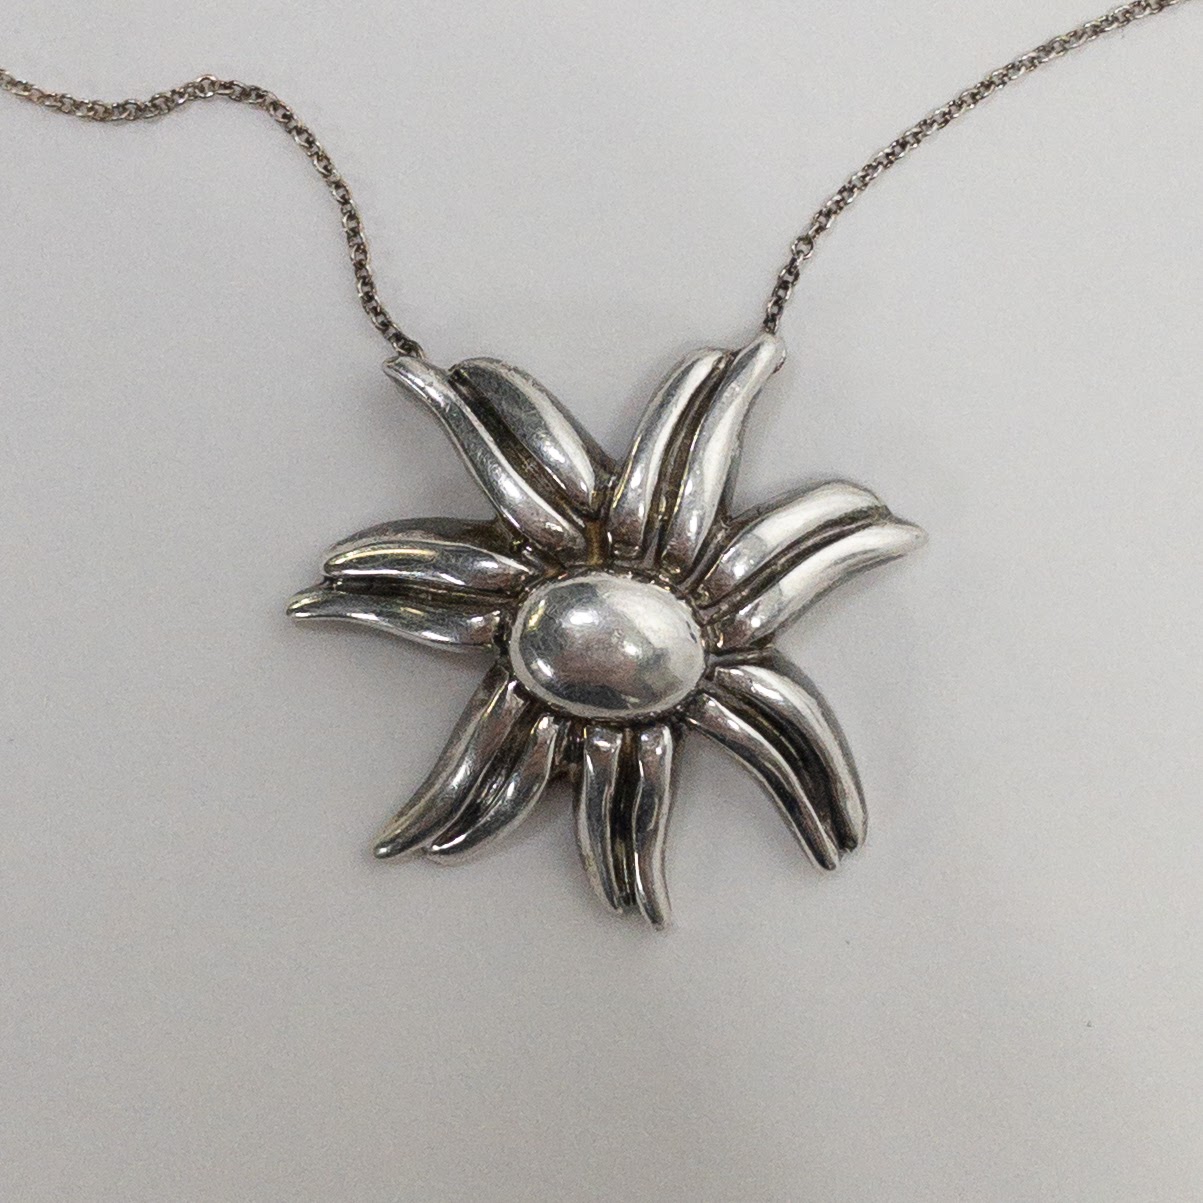 Tiffany & Co. Sterling Silver Necklace & Sun Pendant